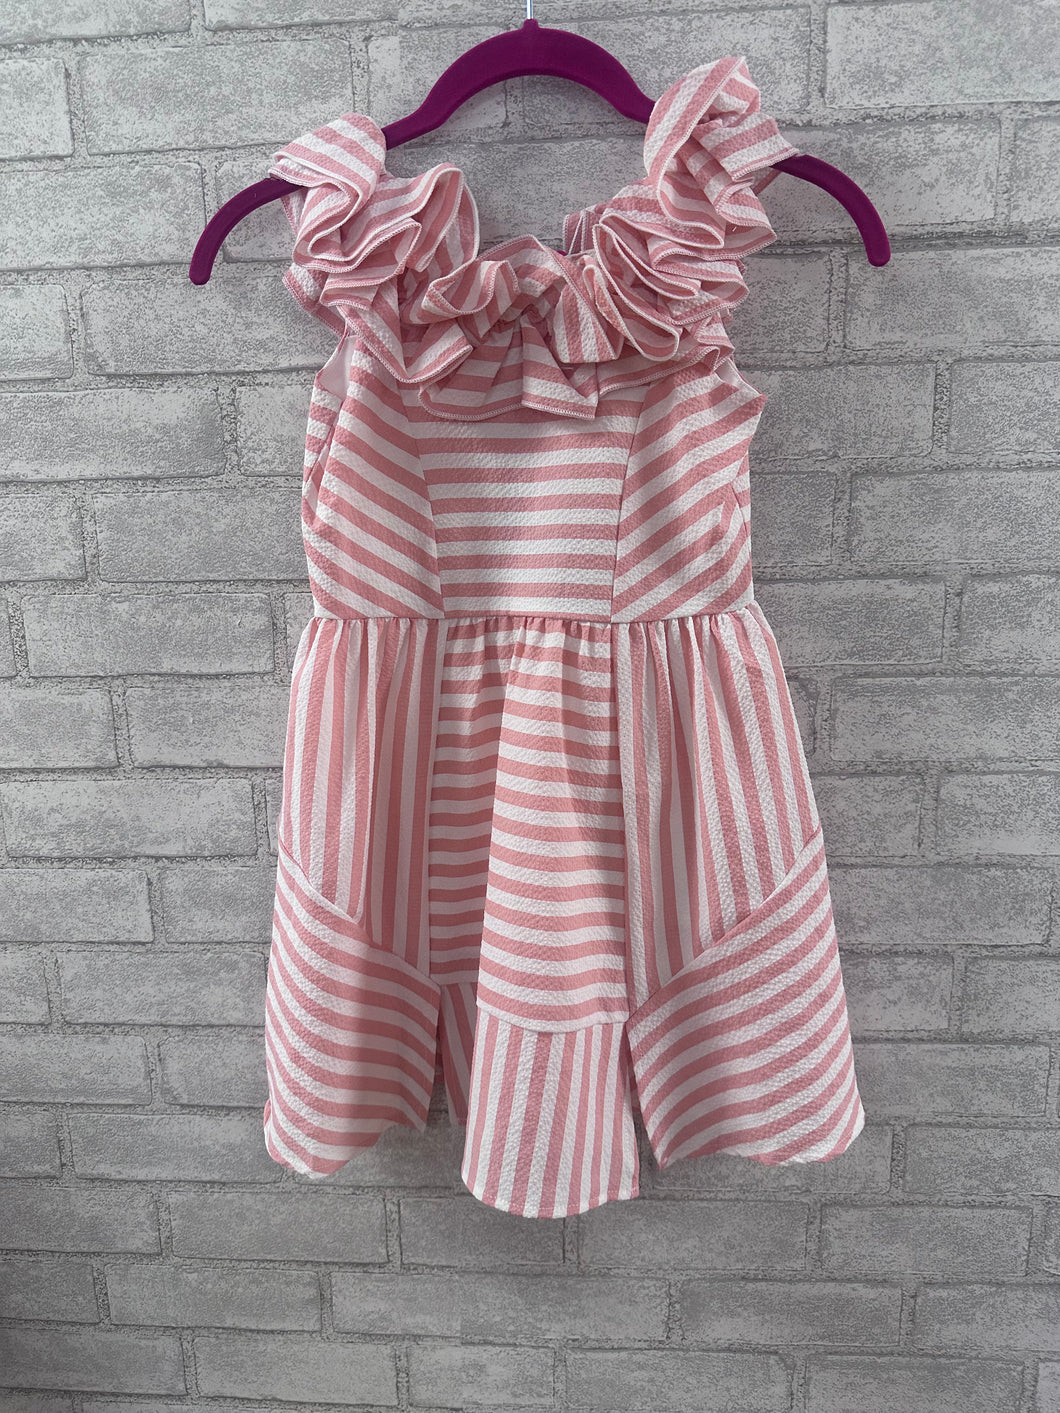 Pink/white striped midi dress with shoulder ruffles -kids